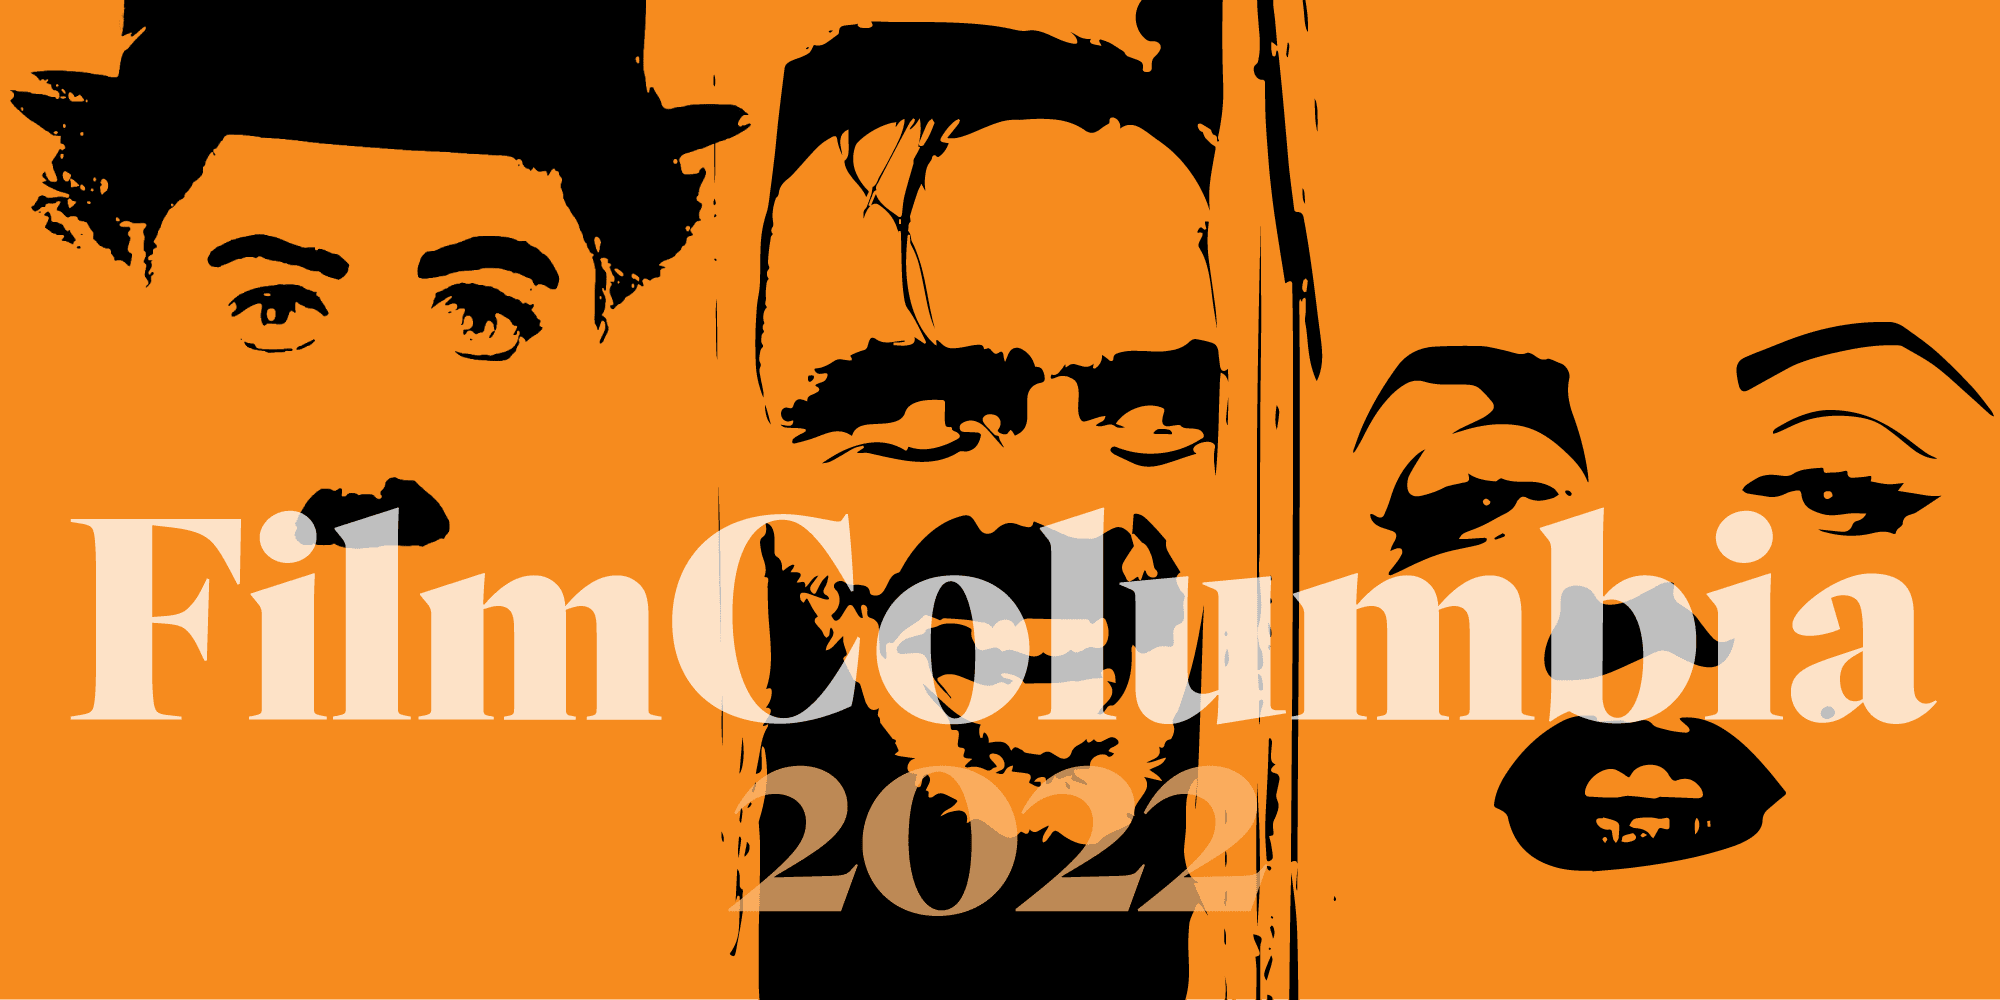 FilmColumbia 2022 logo